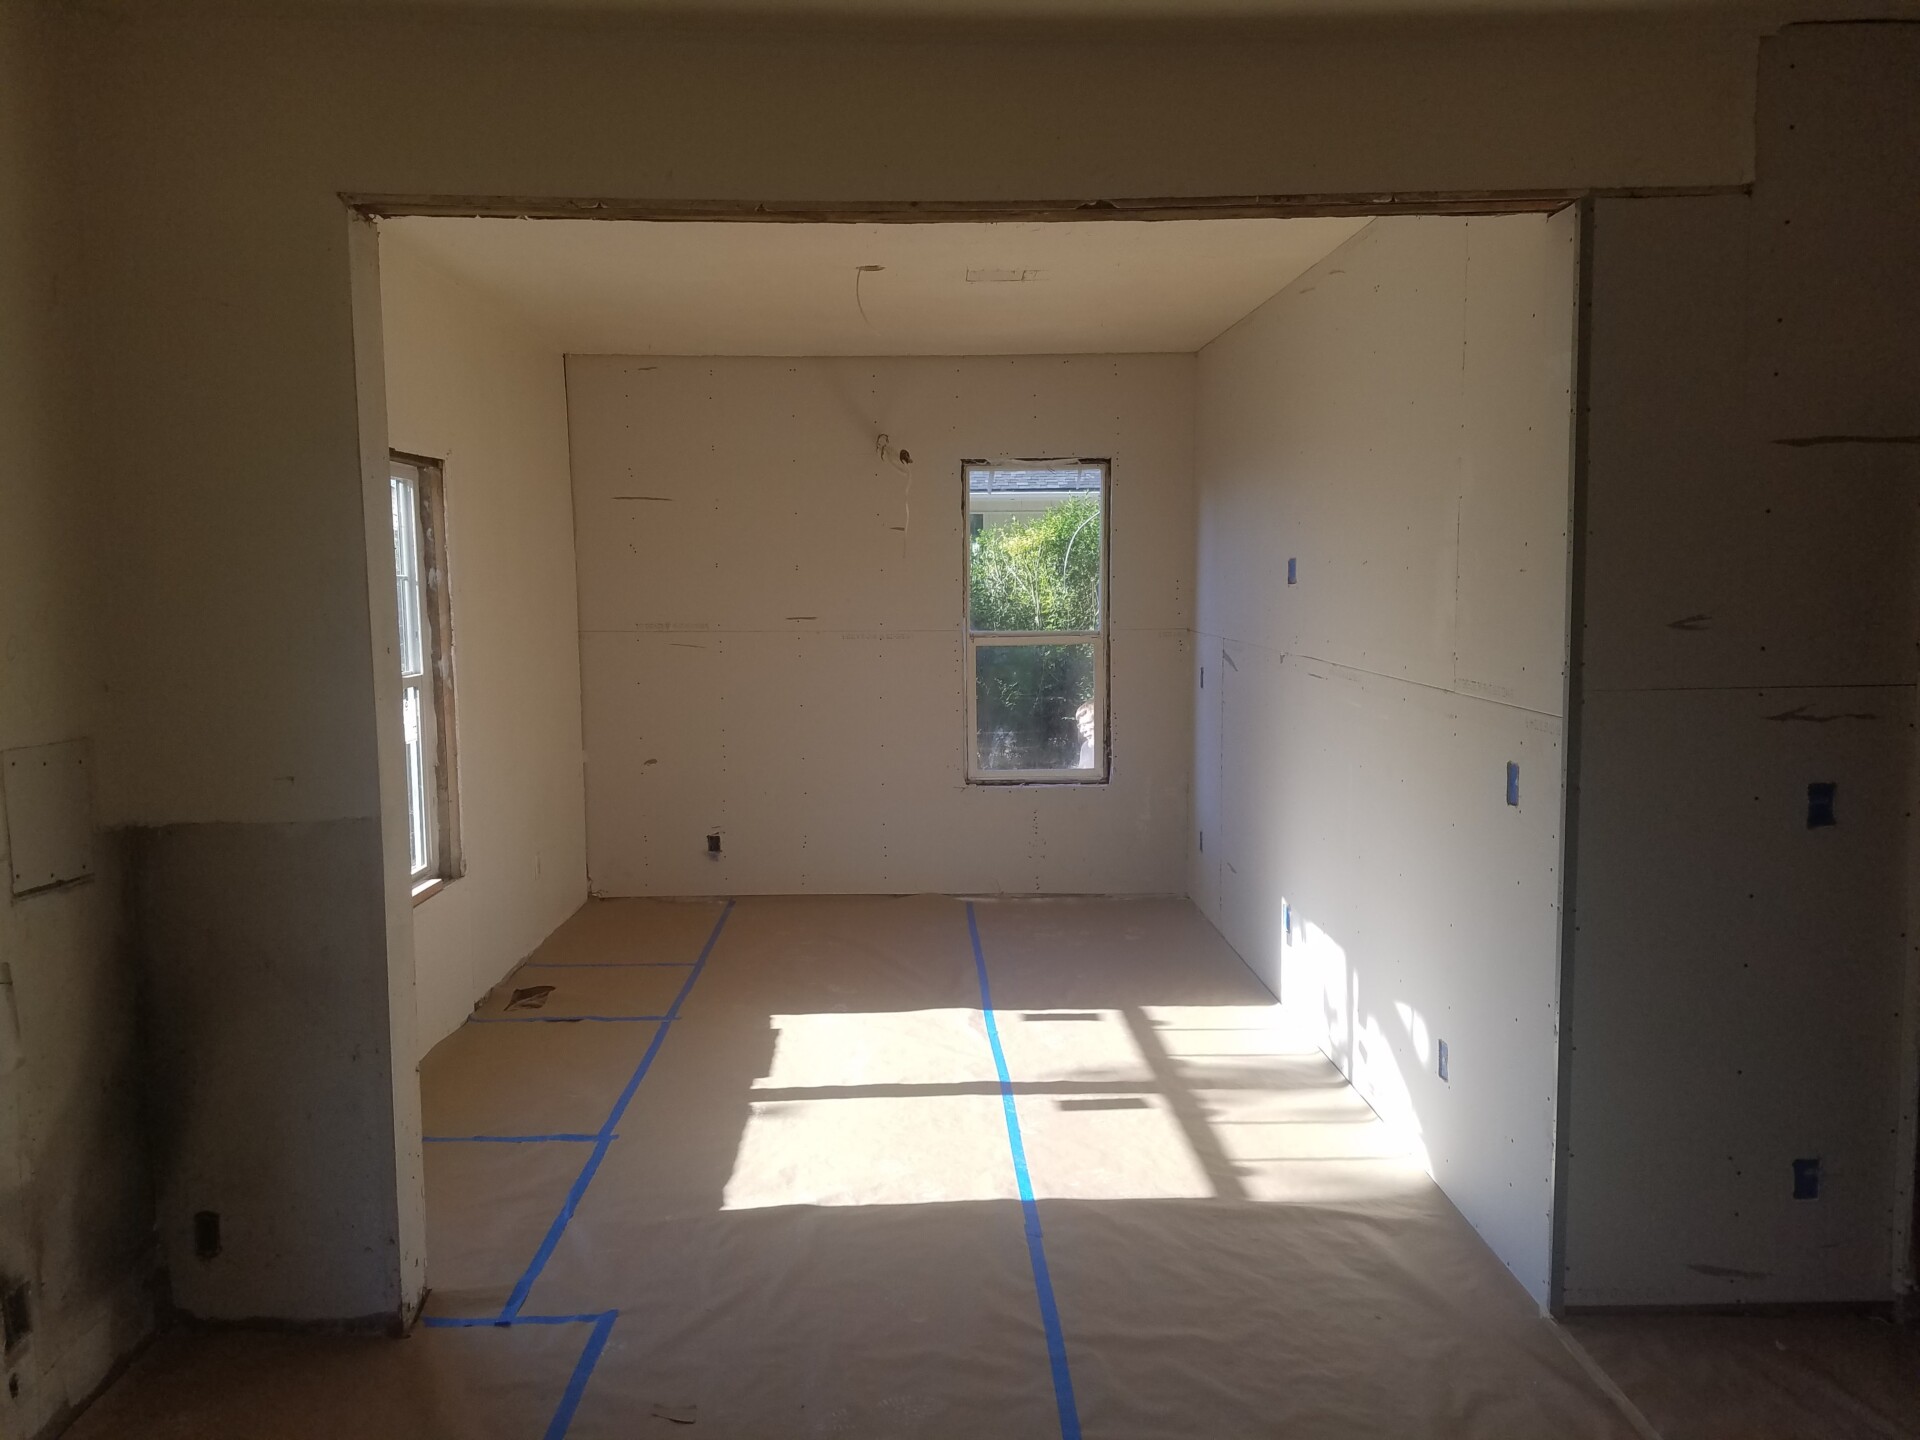 Room mid construction